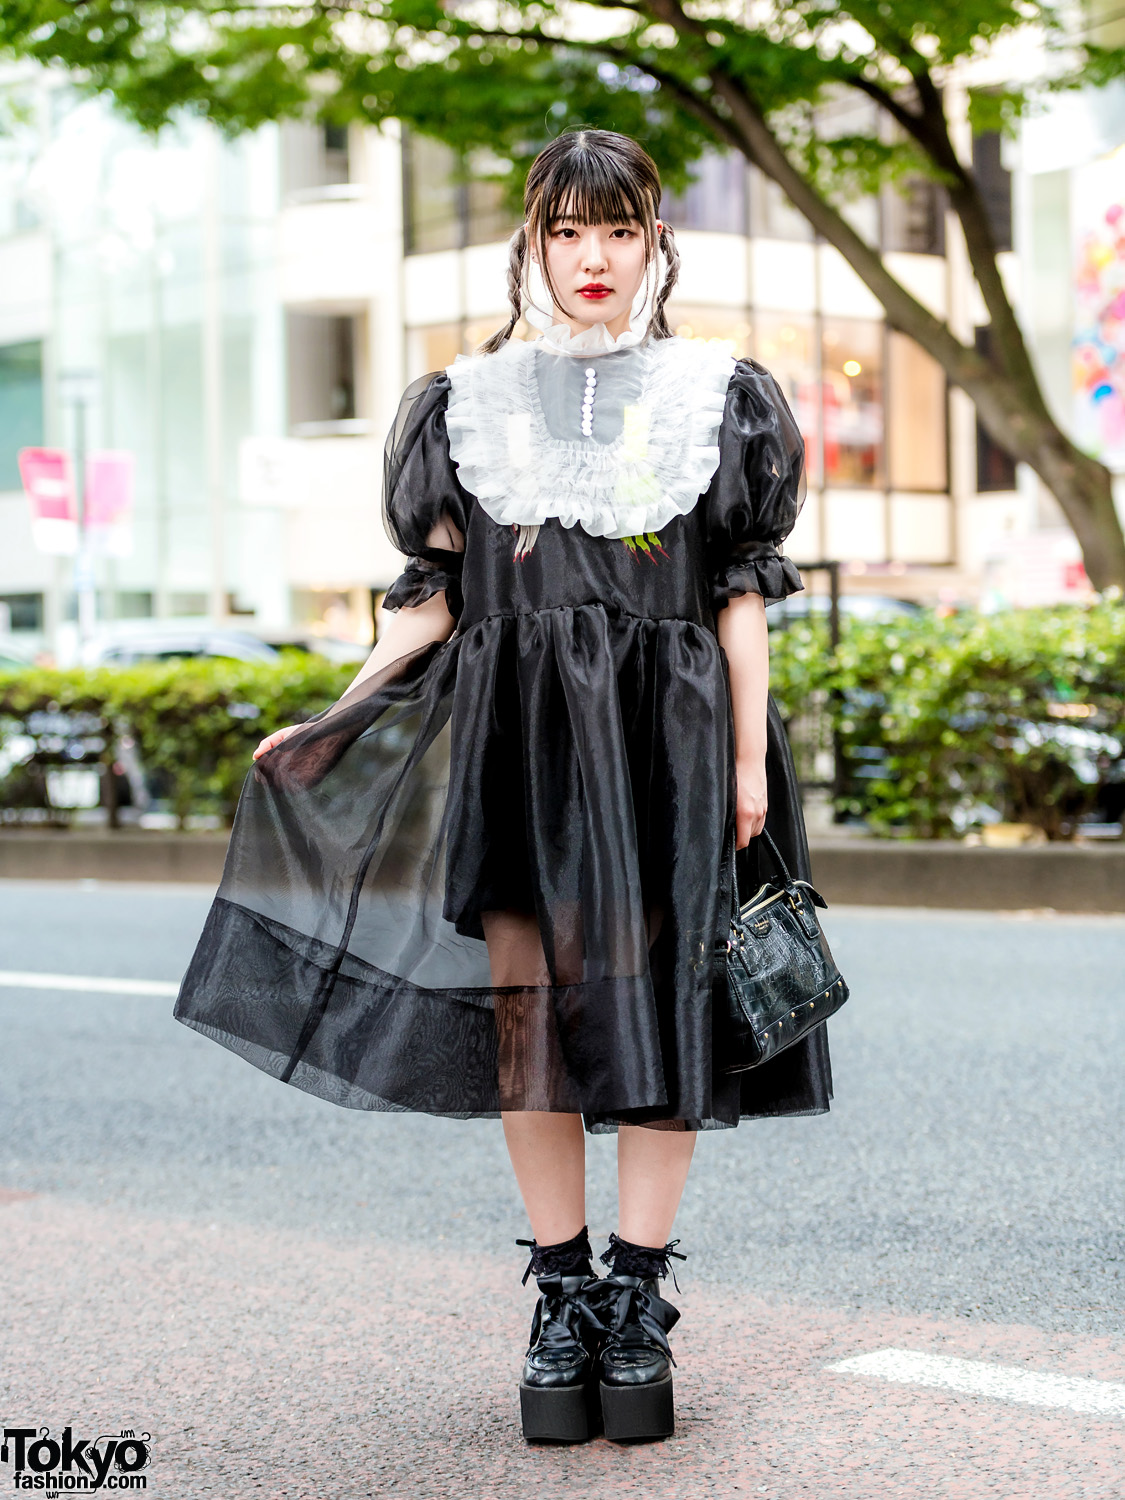 Harajuku Girl in HEIHEI Sheer Ruffle Monochrome Dress & Ribbon Laces Platforms